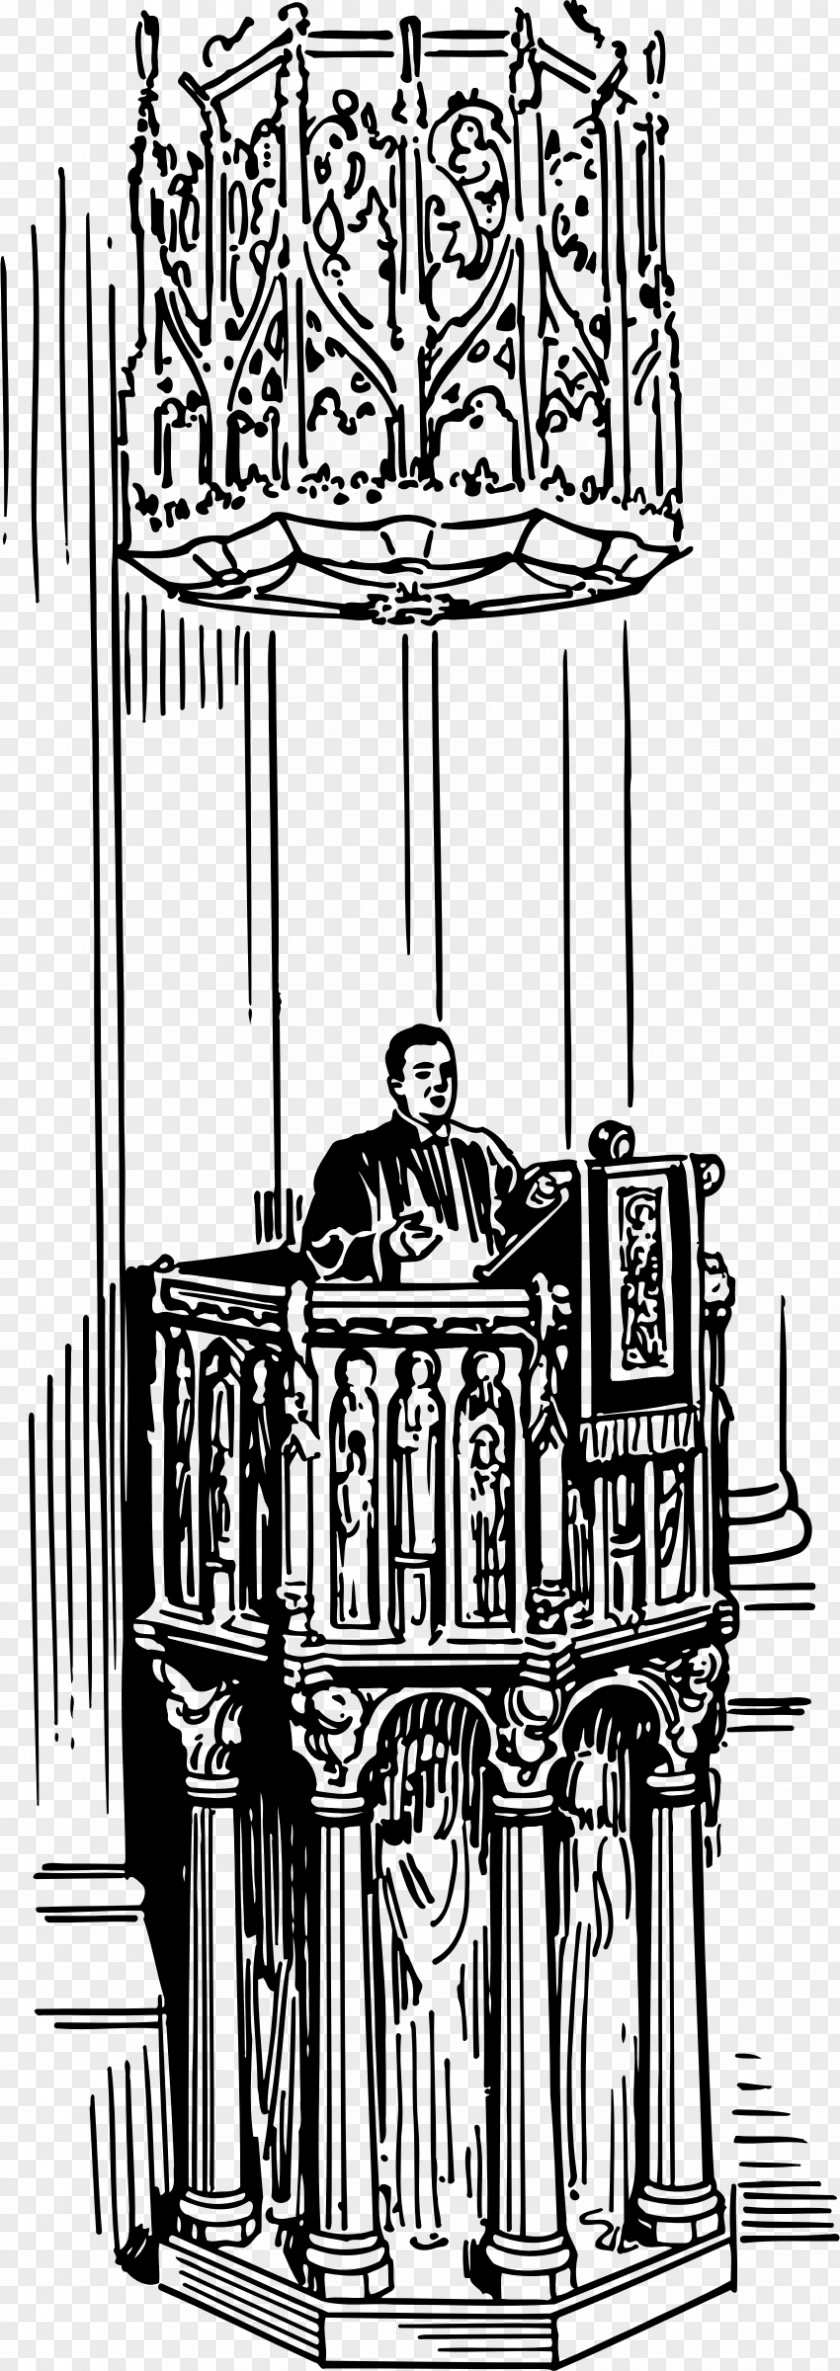 Church Pulpit Preacher Clergy Clip Art PNG